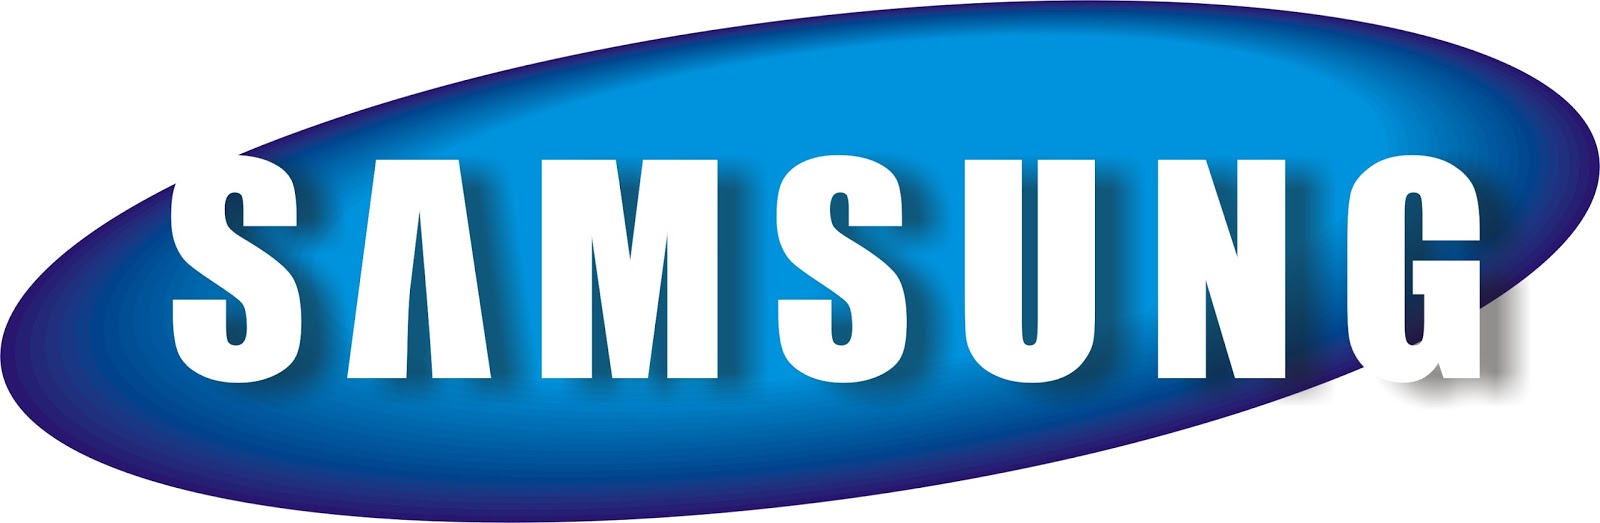 Samsung HD, Phone, Samsung, S